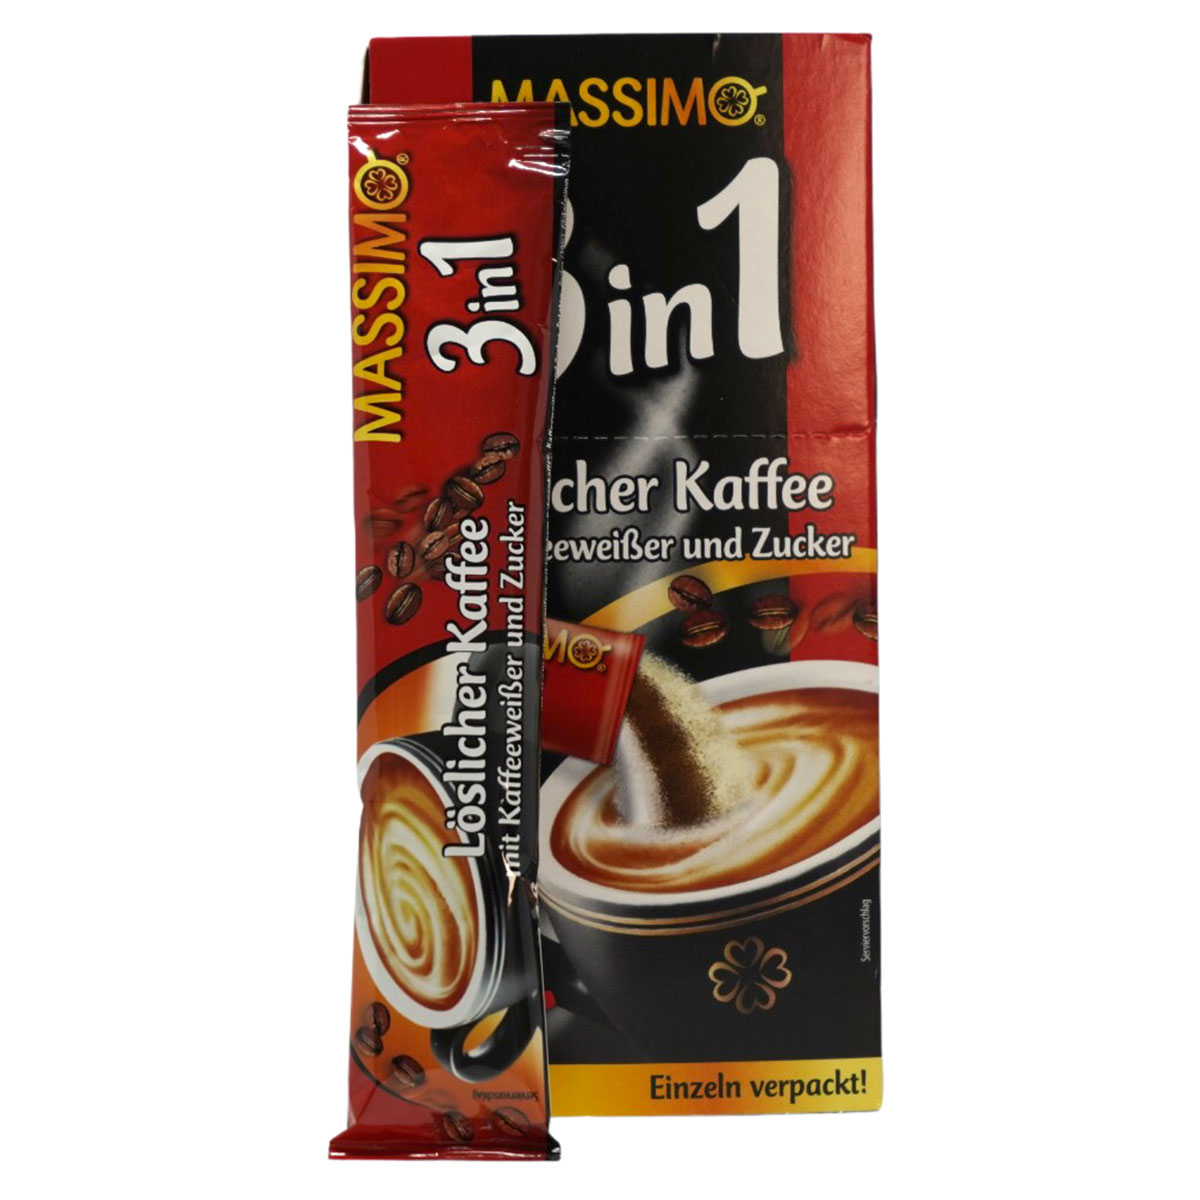 3in1 Kaffee Massimo